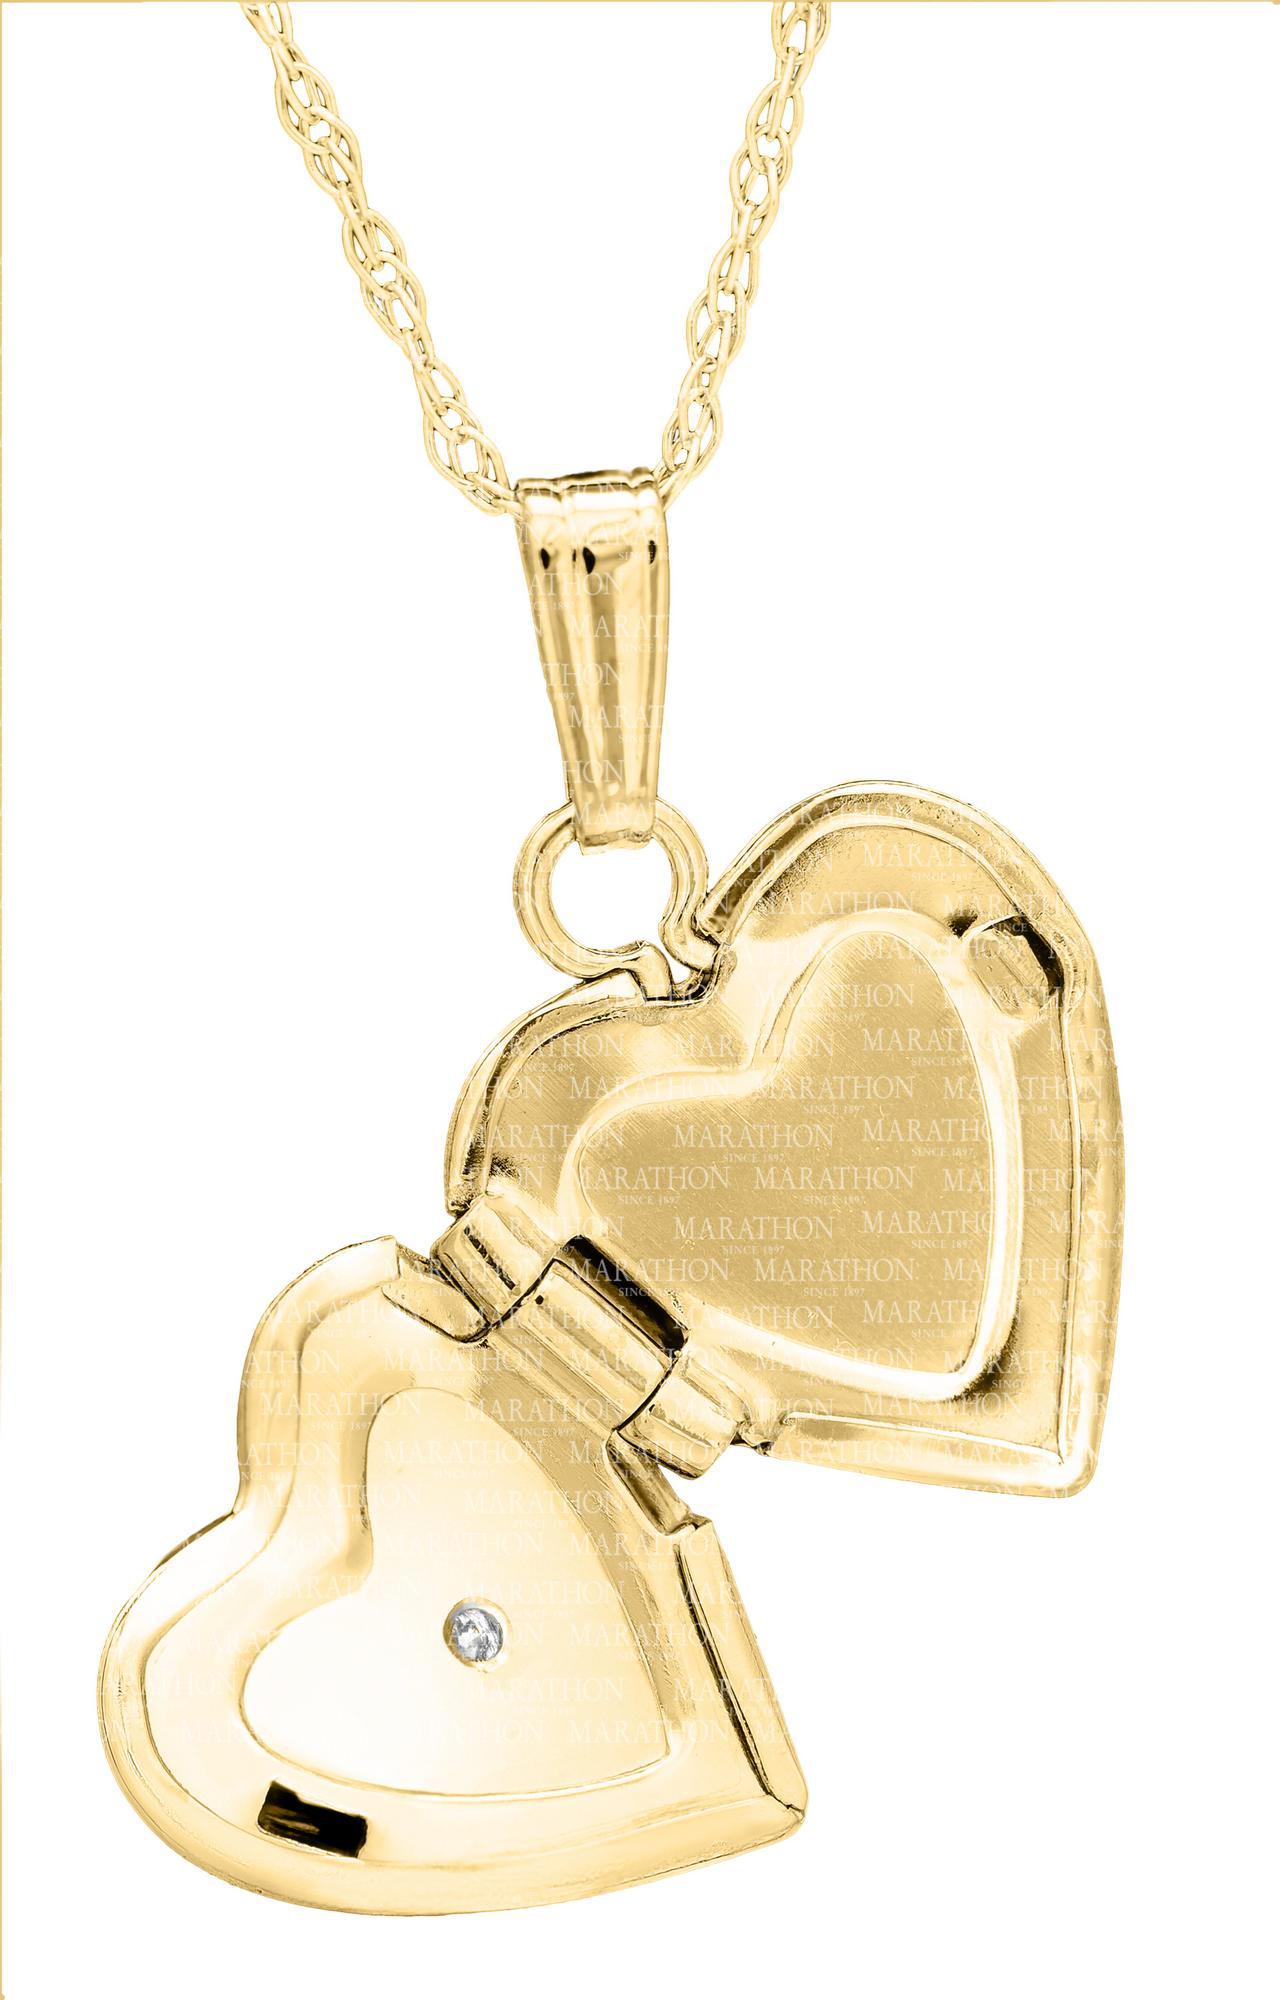 Children's Sterling Silver Heart Locket Necklace | Primrose Hill